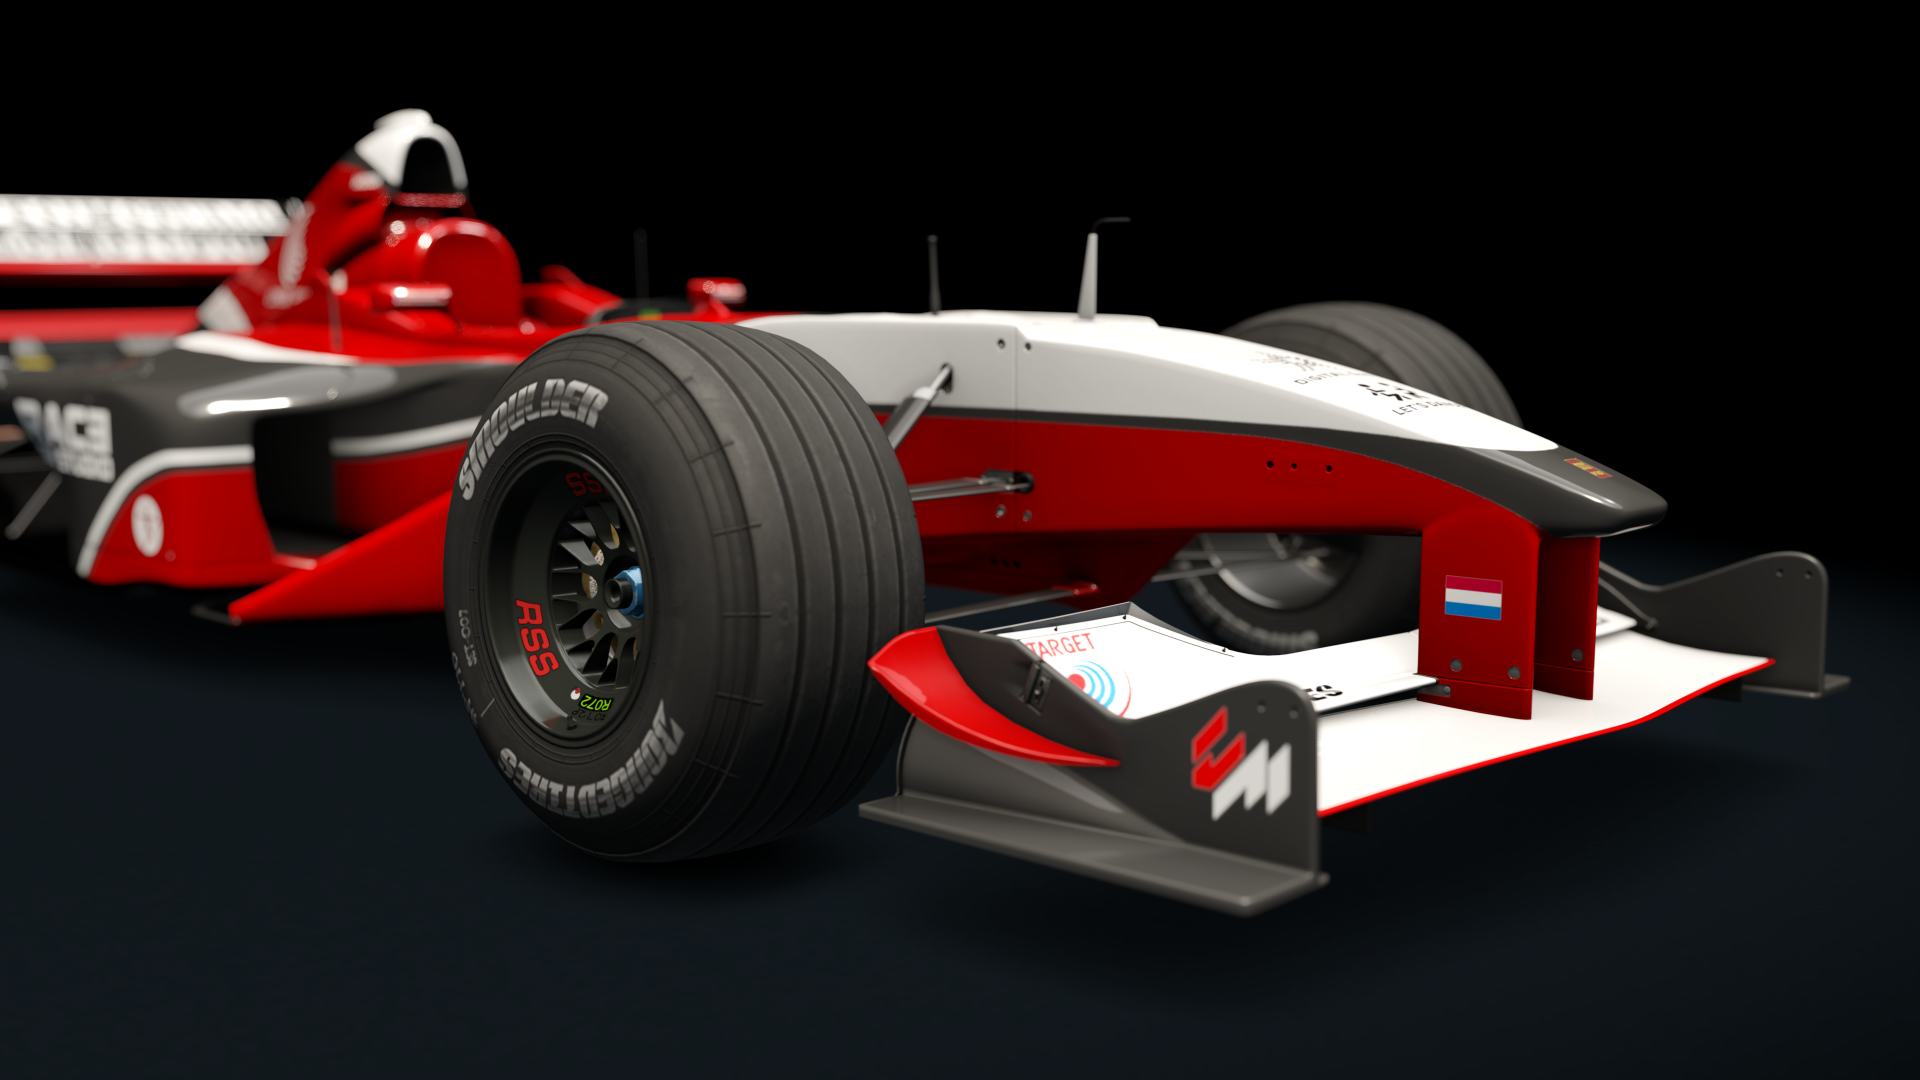 Assetto Corsa Formula Rss V By Racesim Studio Modding